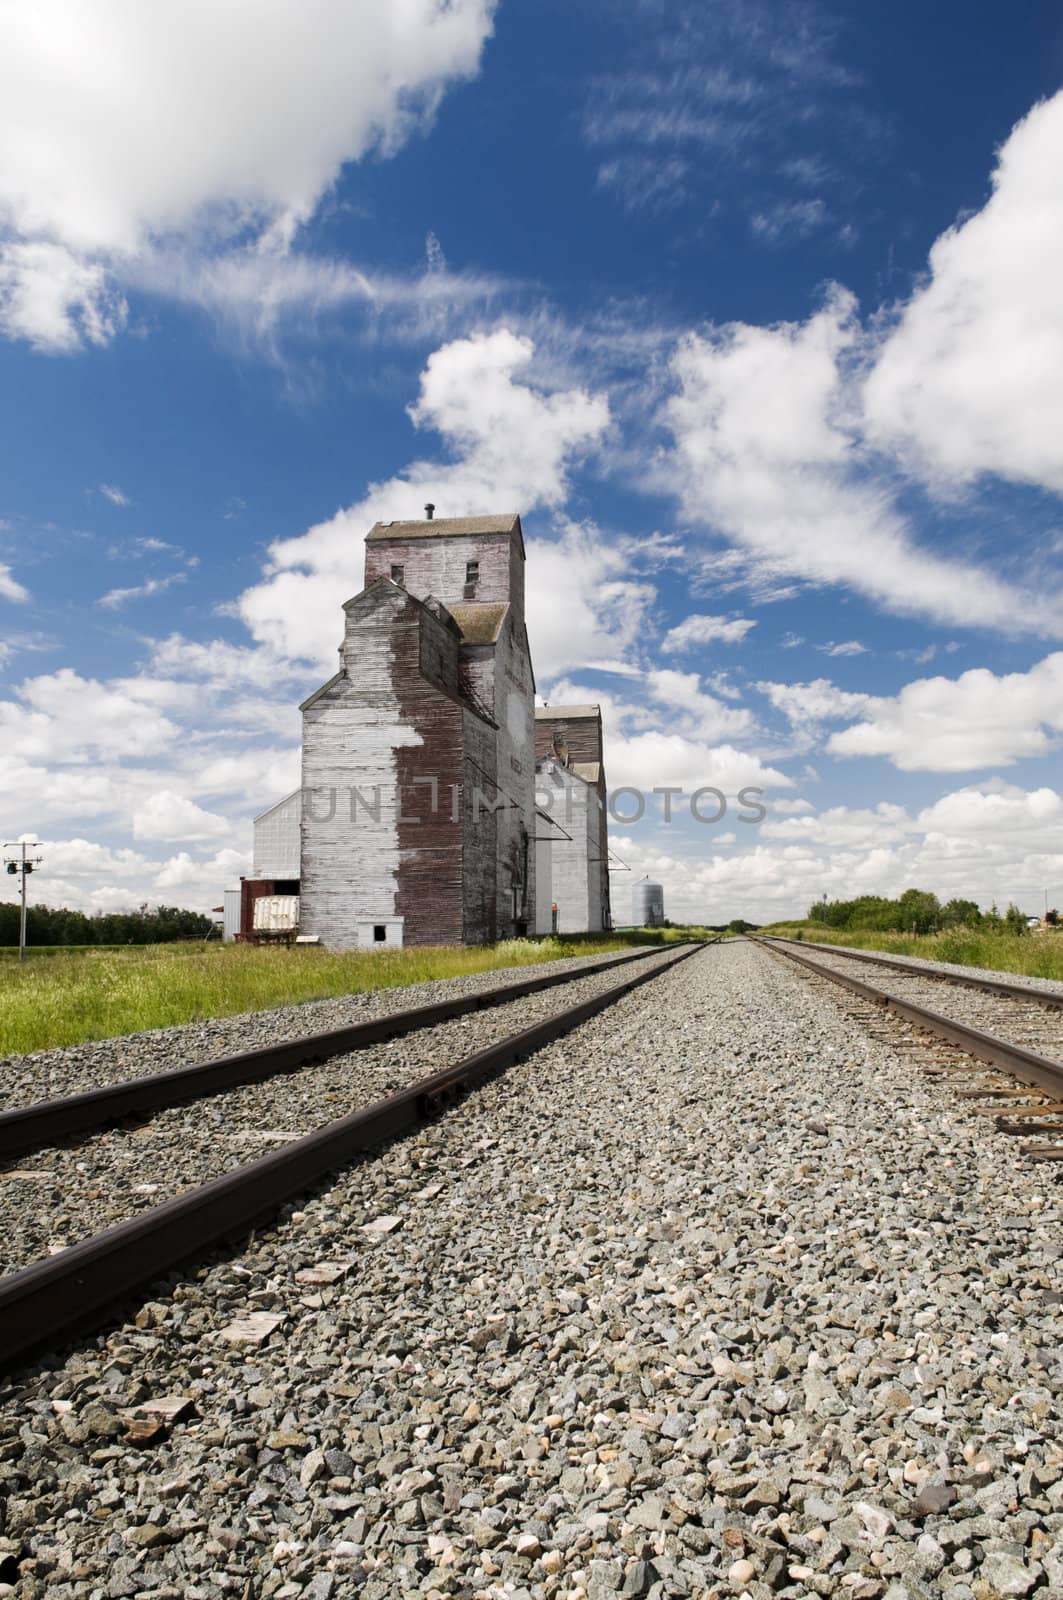 Old grain elevator located in rural Saskatchewan with railway line perspective